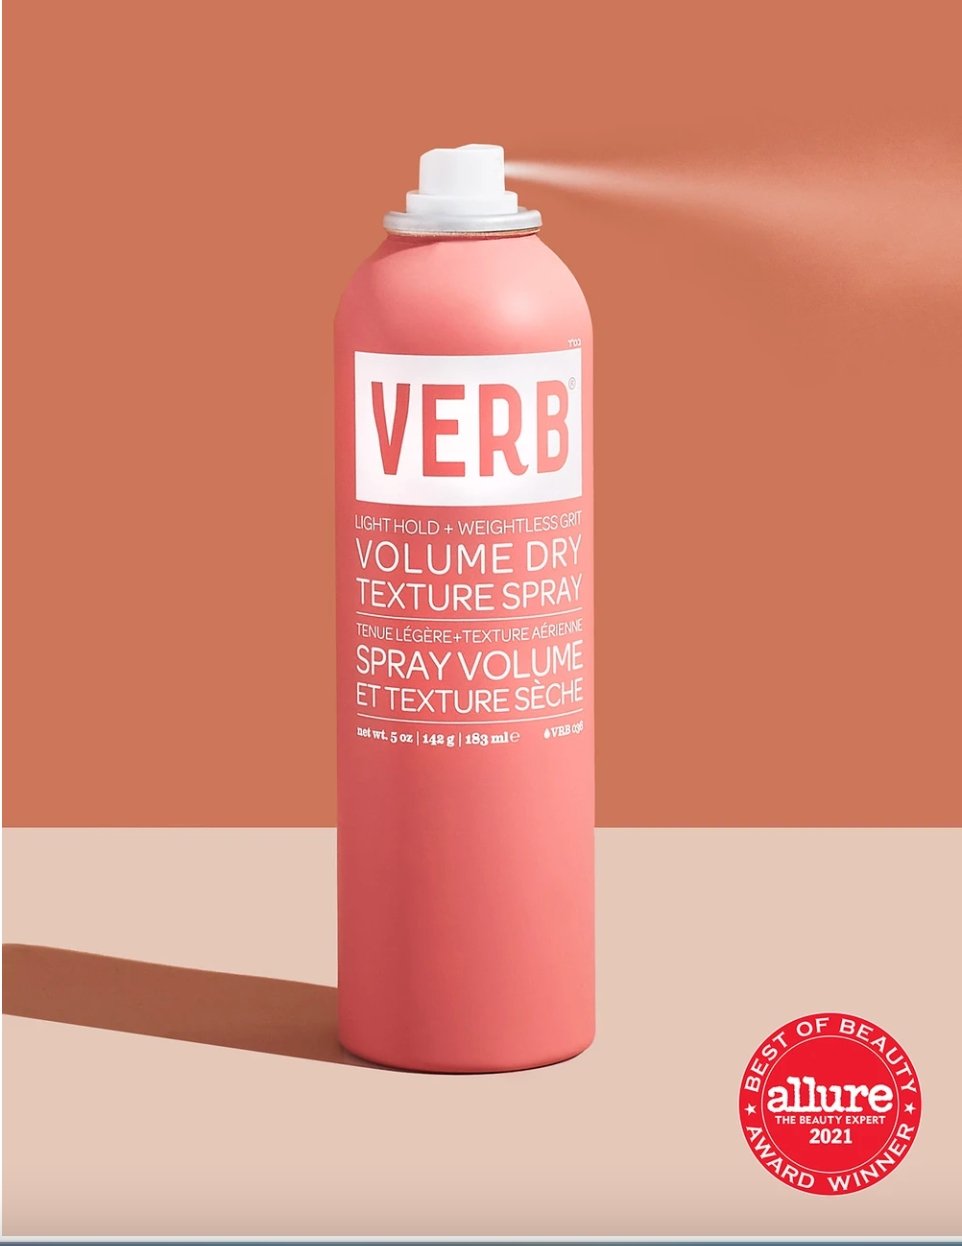 VERB Volume Dry Texture Spray - Blend Box